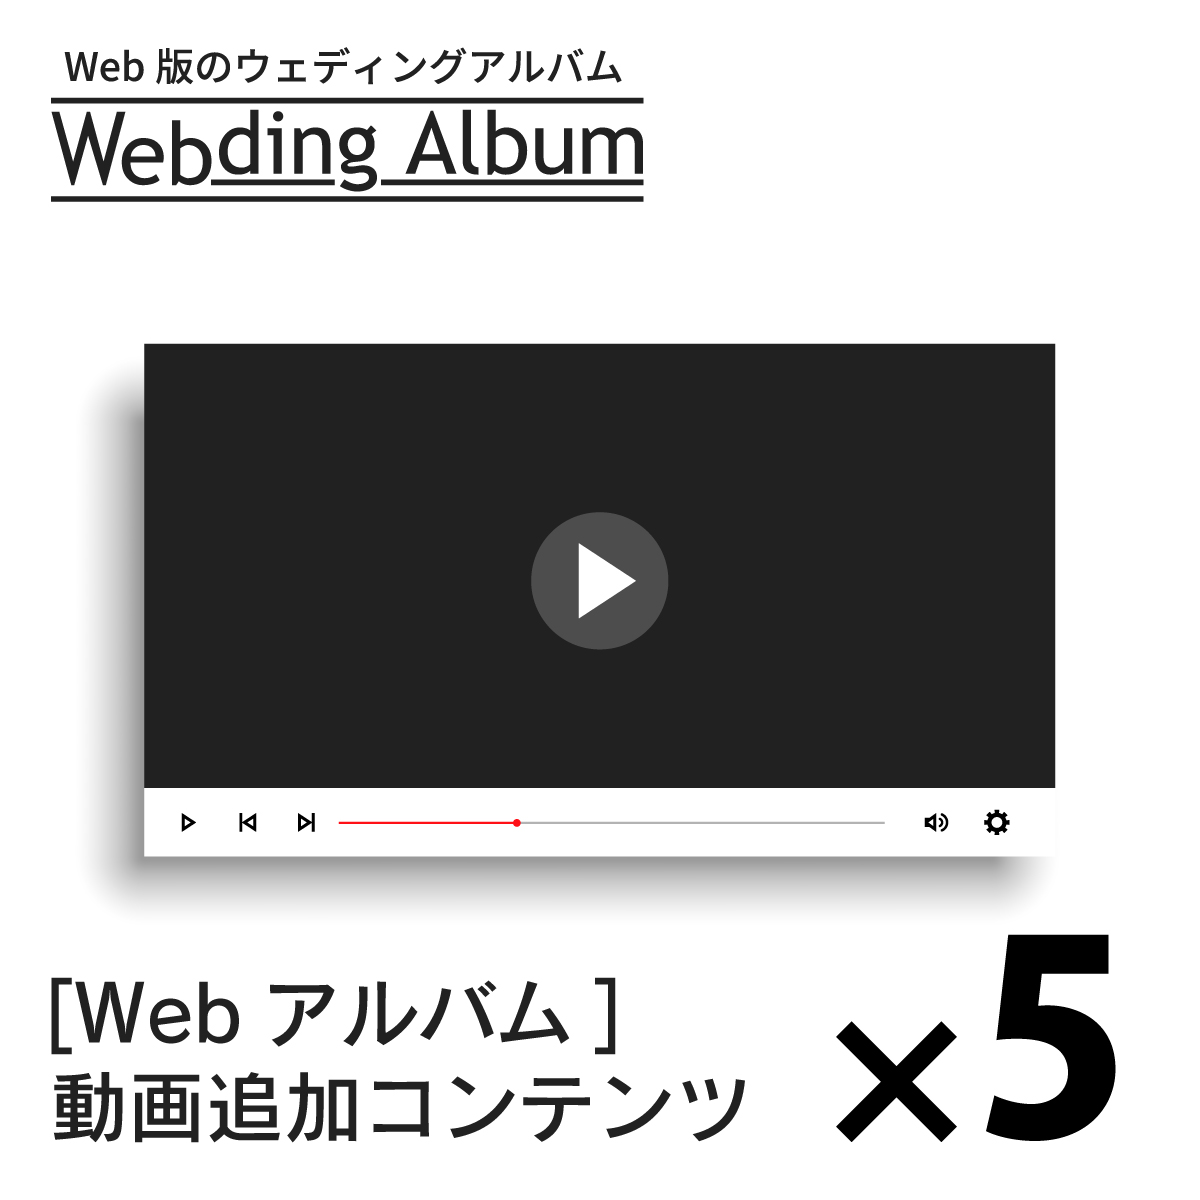 Webding Albumの動画追加コンテンツ5パッケージ